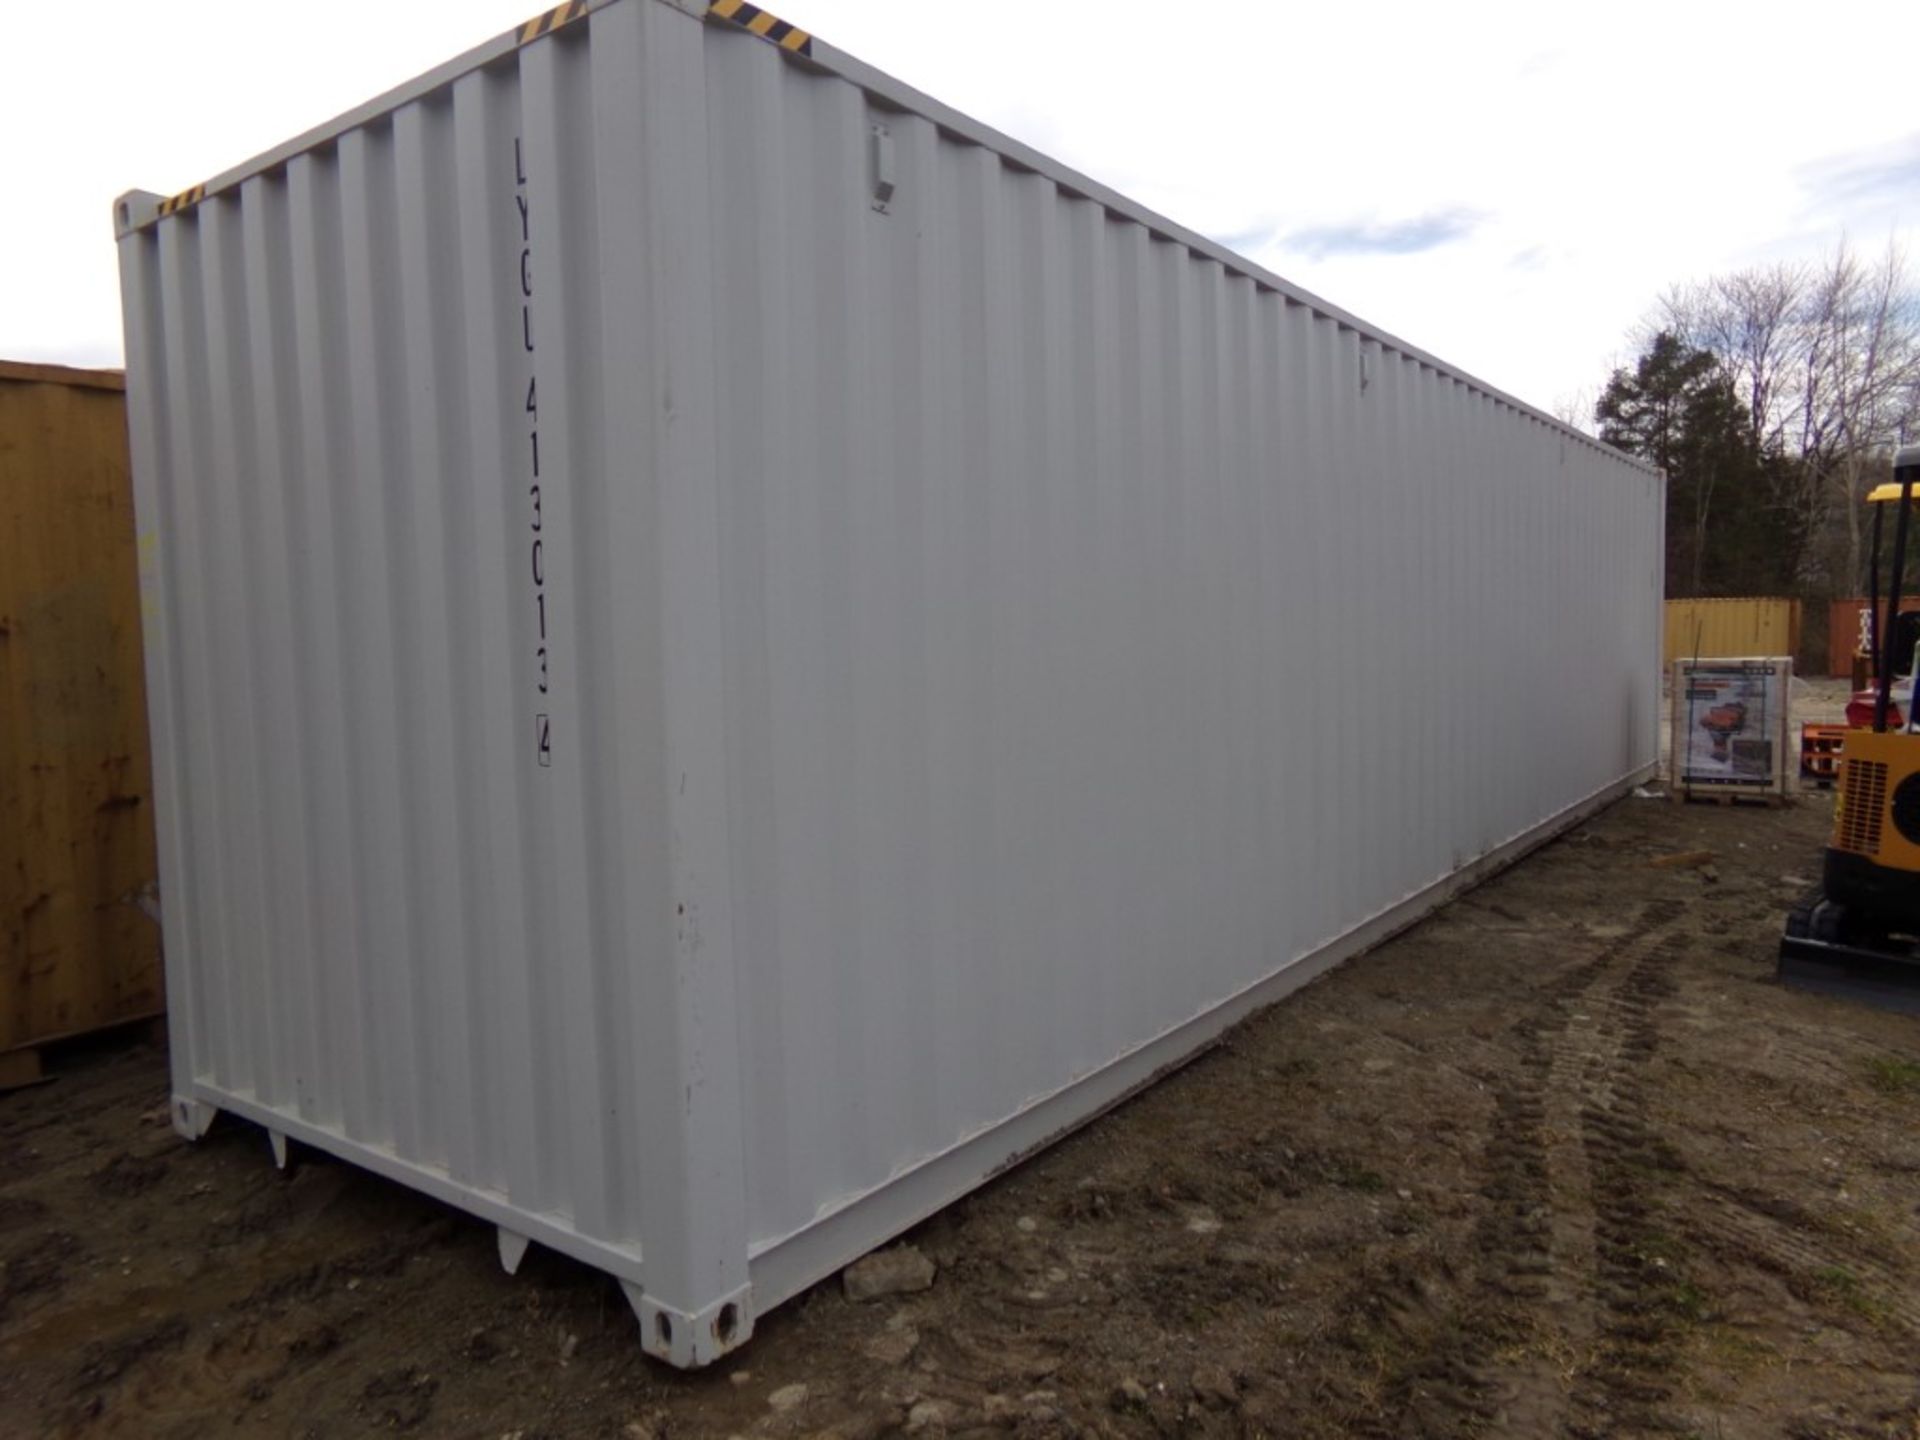 New 40' Off White Storage Container with Barn Doors in 1 End, Cont. # LYGU4130134 - Bild 4 aus 5